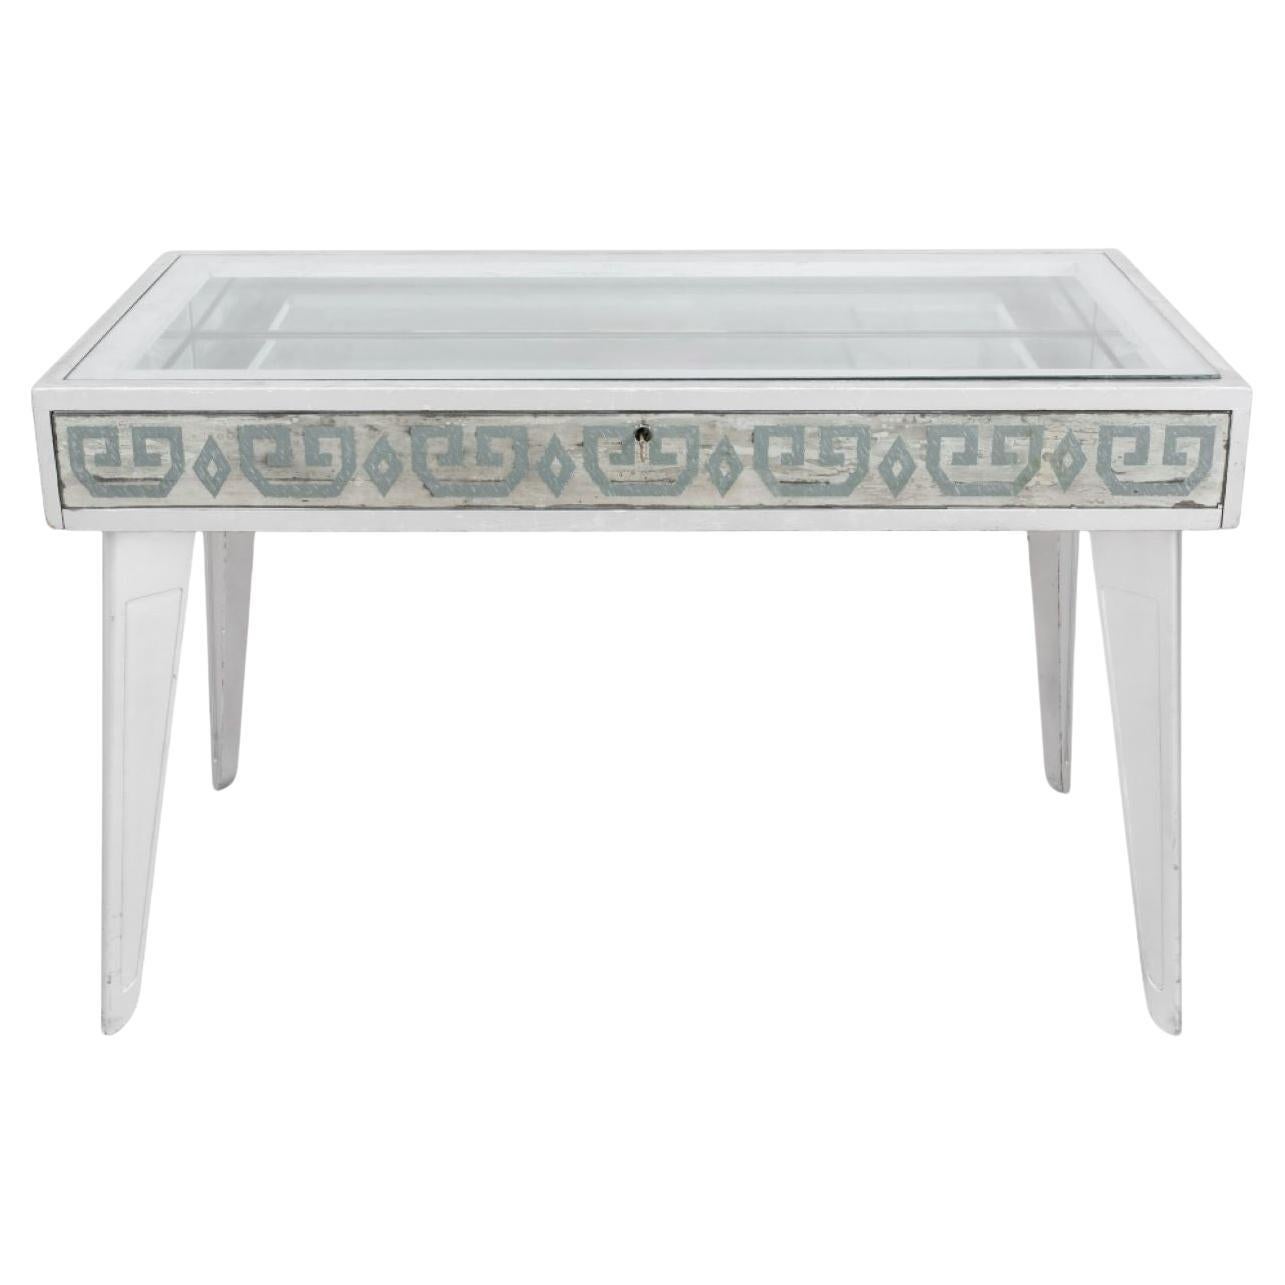 Silvered Art Deco or Moderne Vitrine Table, 1940s